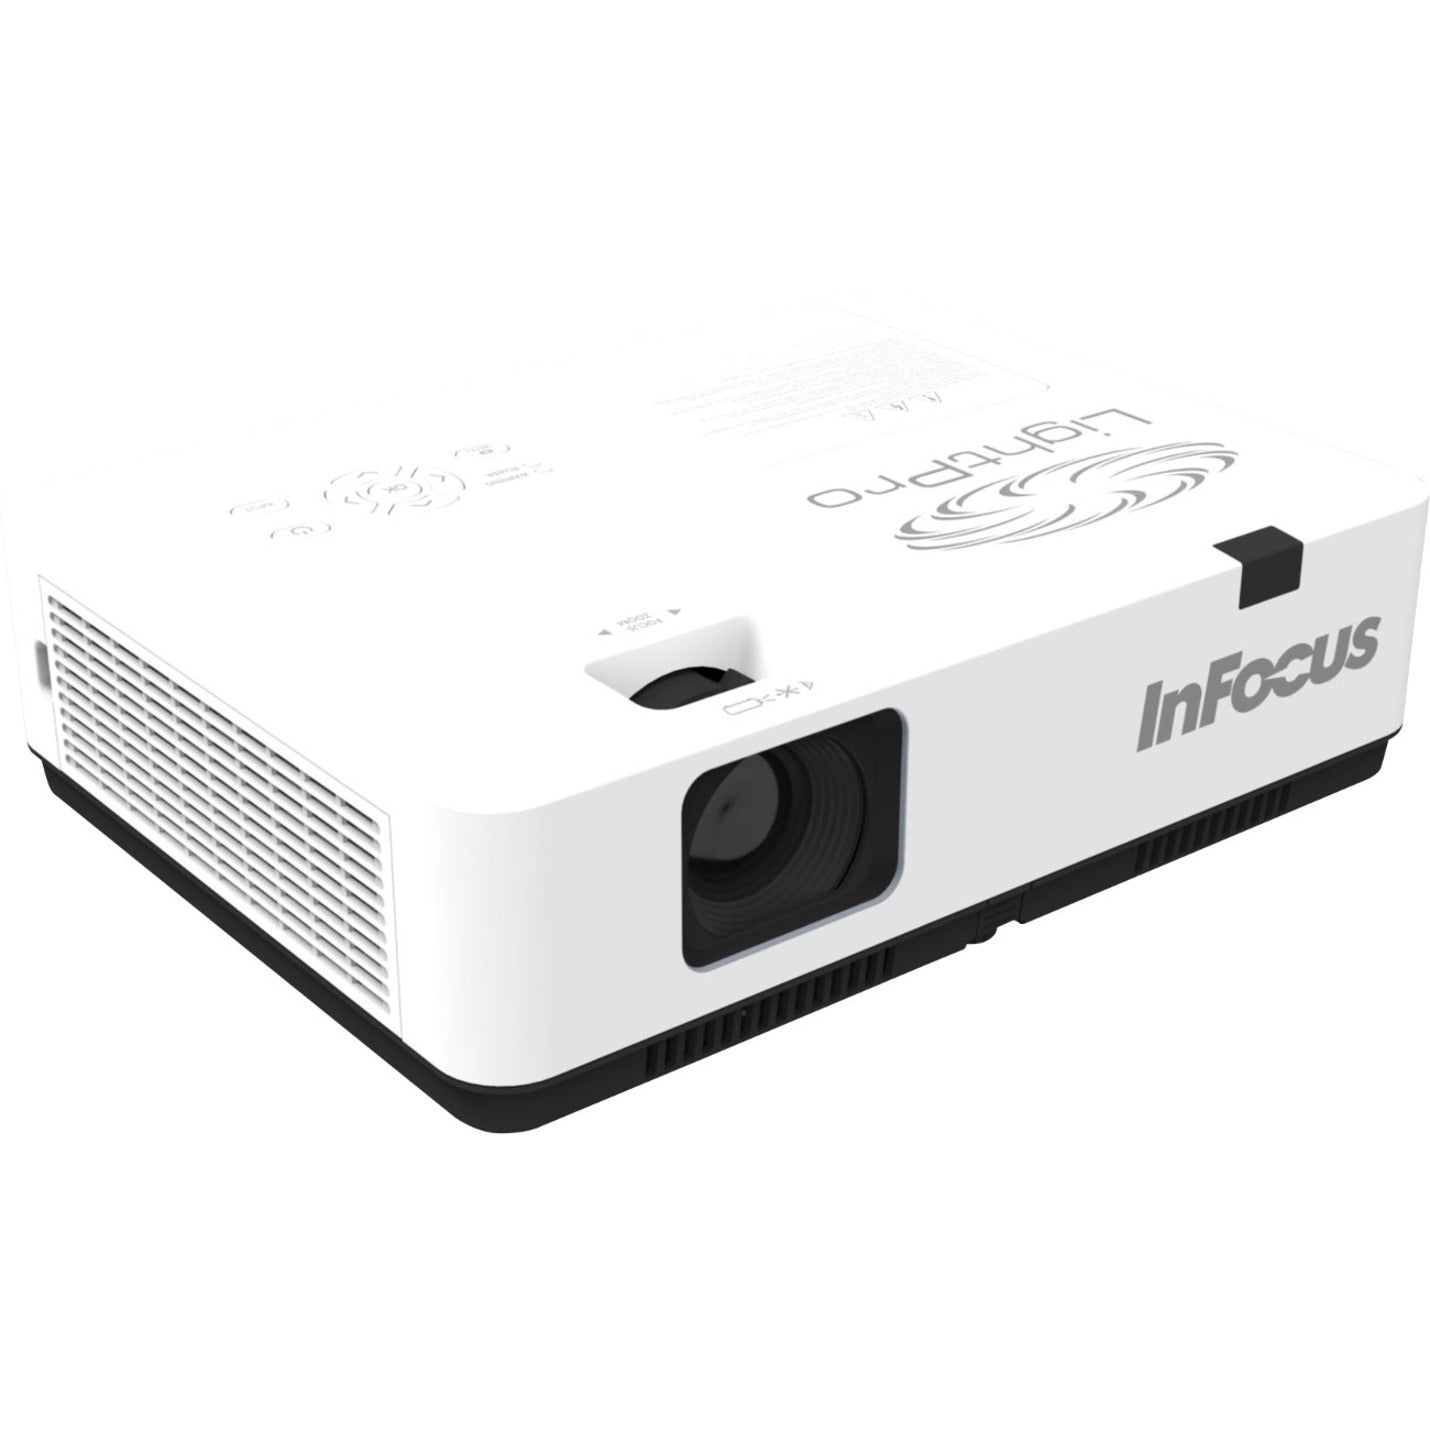 InFocus Advanced IN1004 3LCD Projector - XGA, 3100 lm, 4:3 Aspect Ratio [Discontinued]